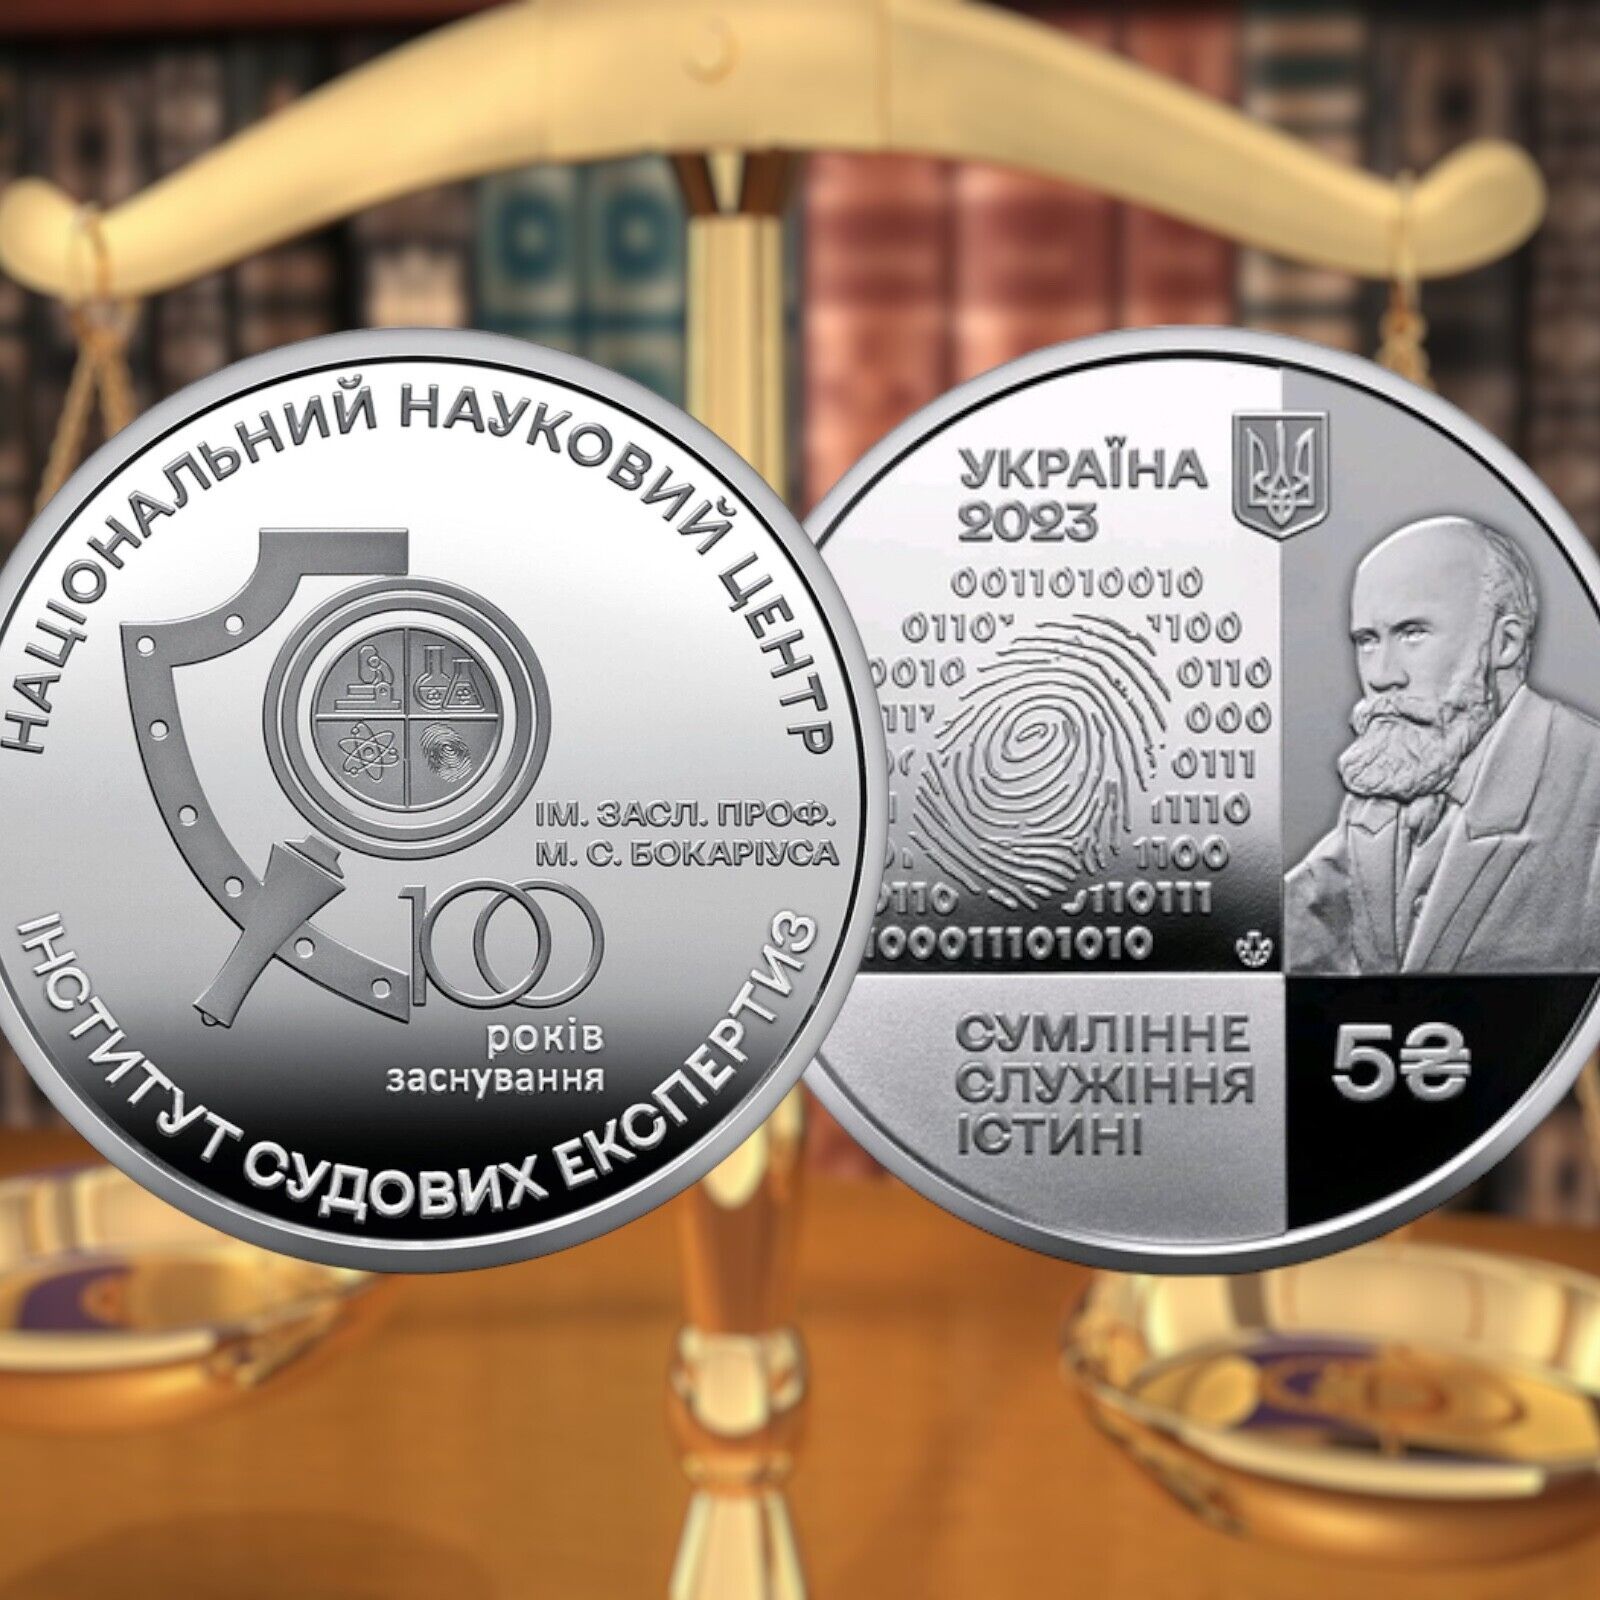 Ukrainian Souvenir Coin “Institute of Forensic Expertise” Support for Ukraine